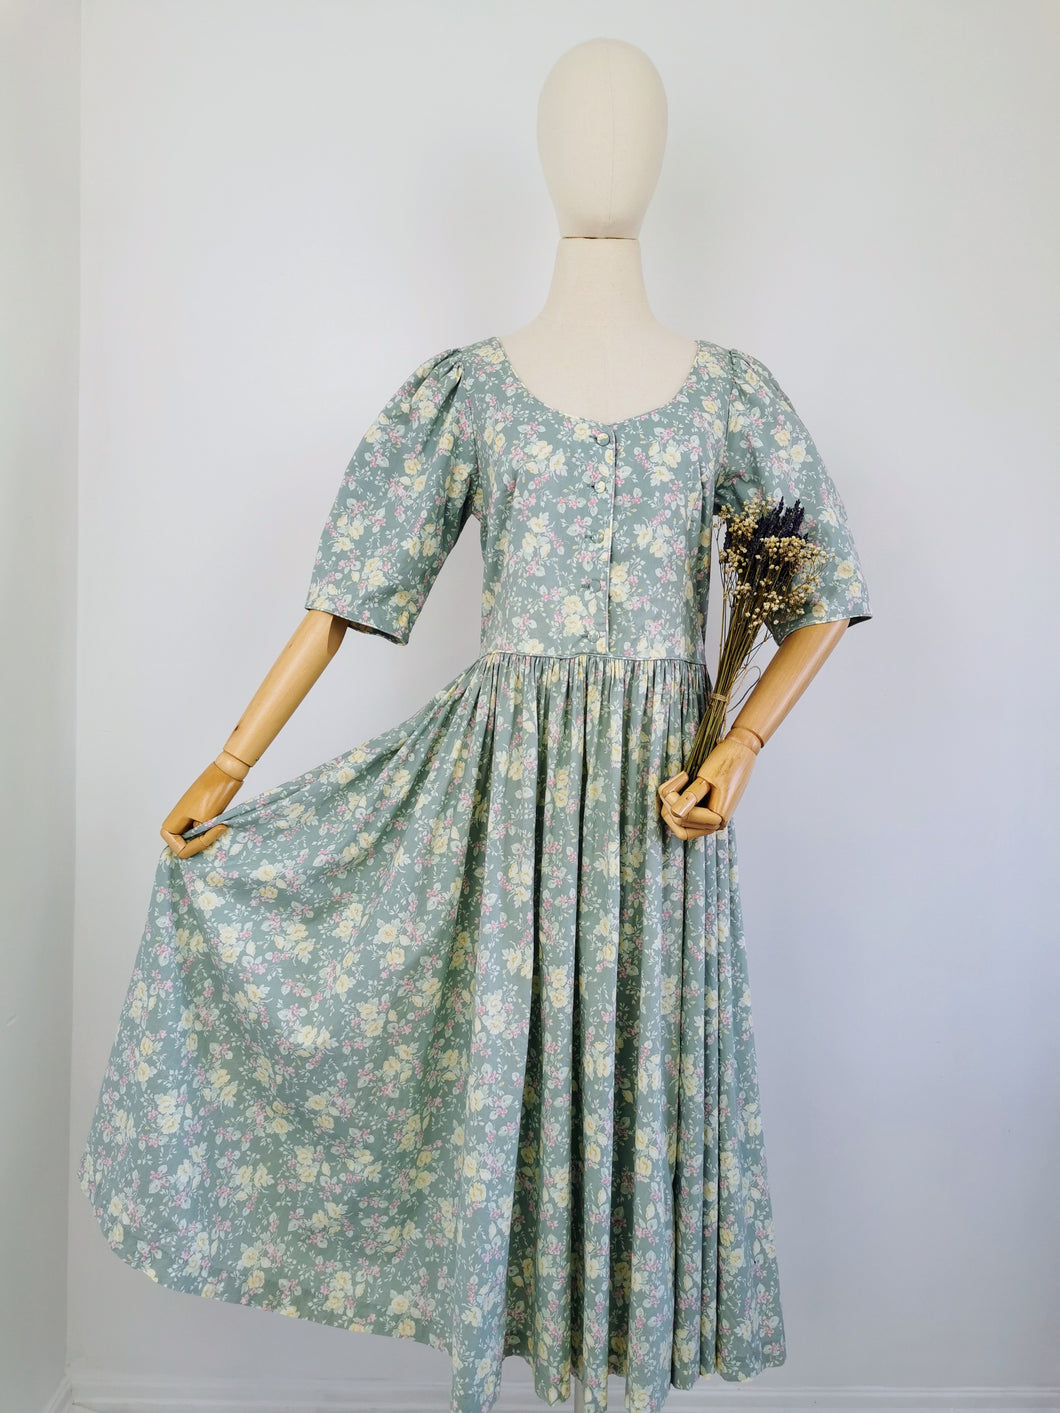 Vintage Laura Ashley sage dress